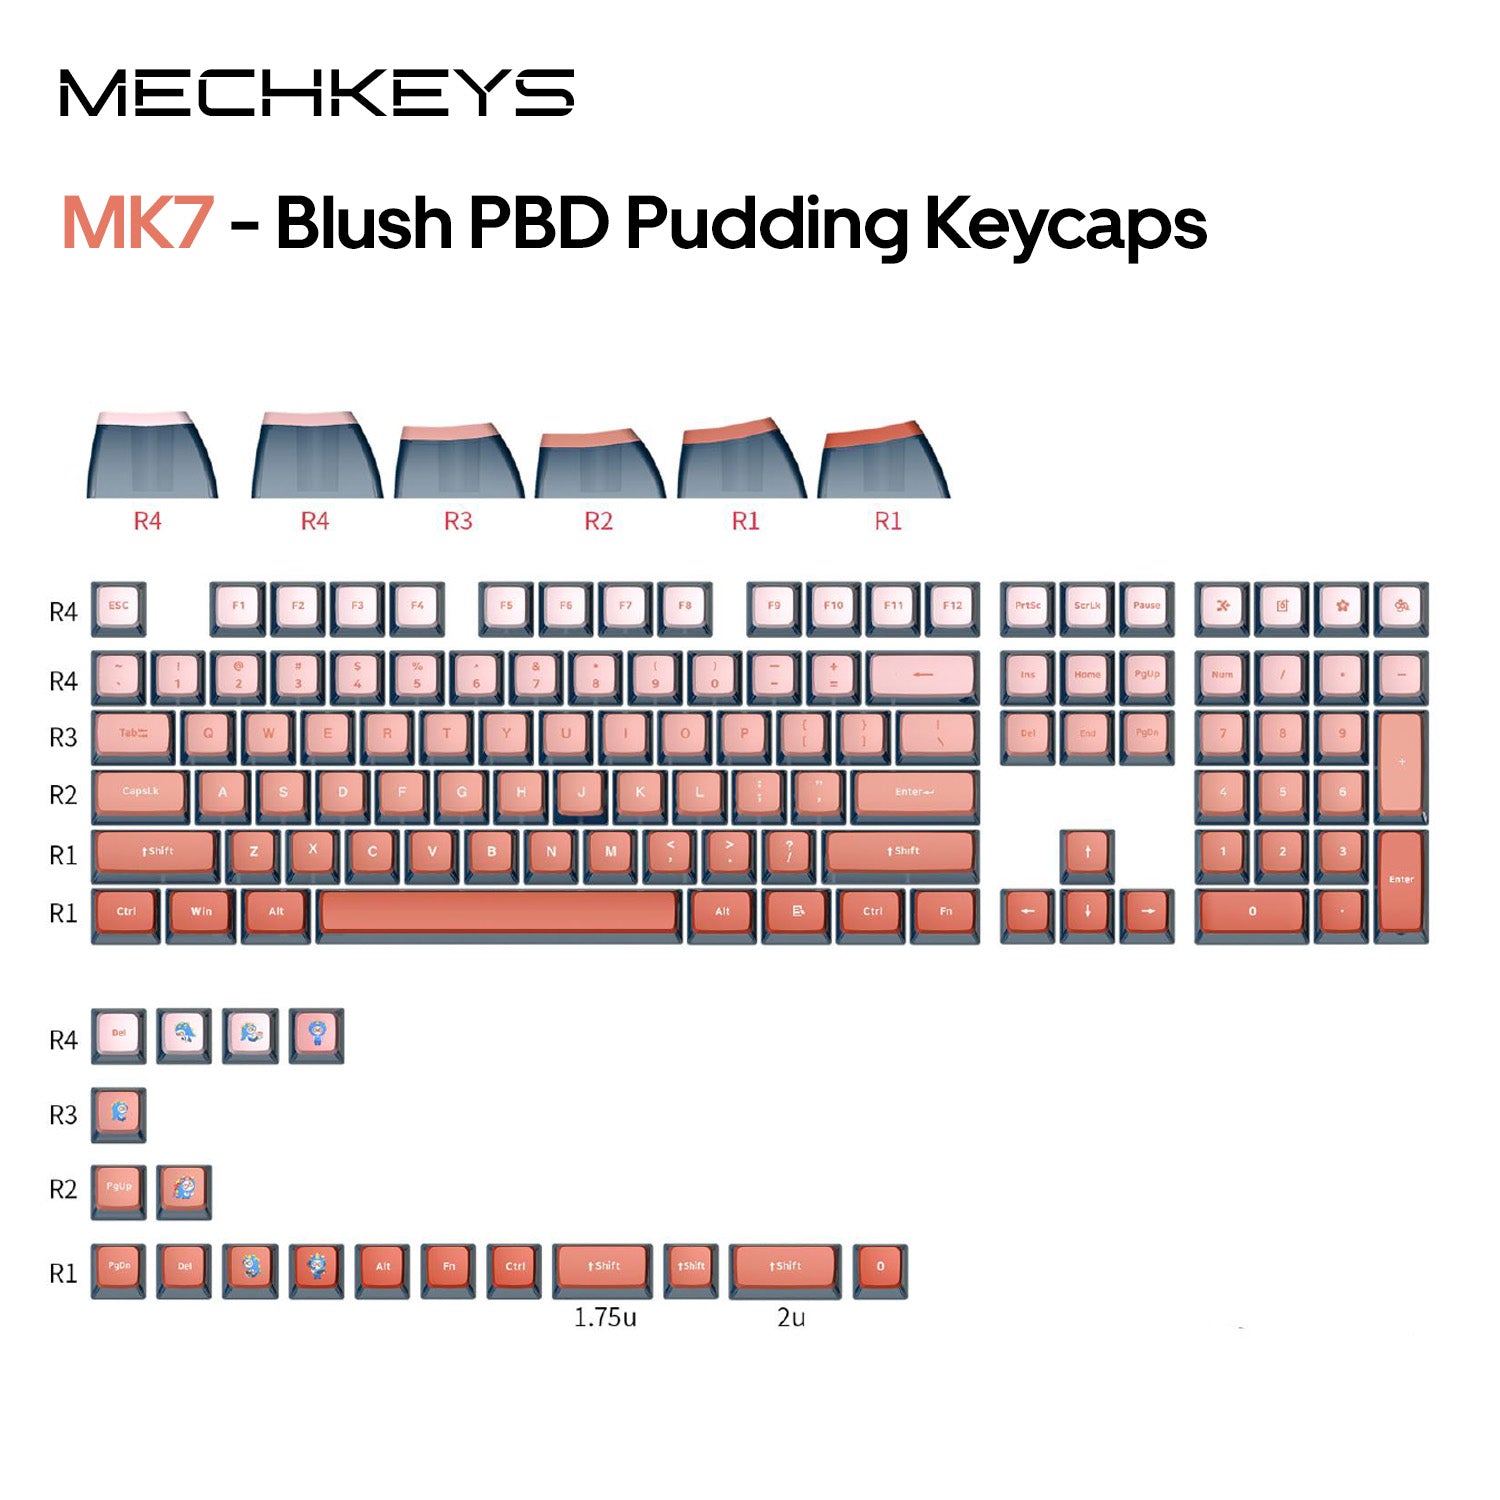 OVERCLOCK MECHKEYS Blush PBT Pudding Keycaps